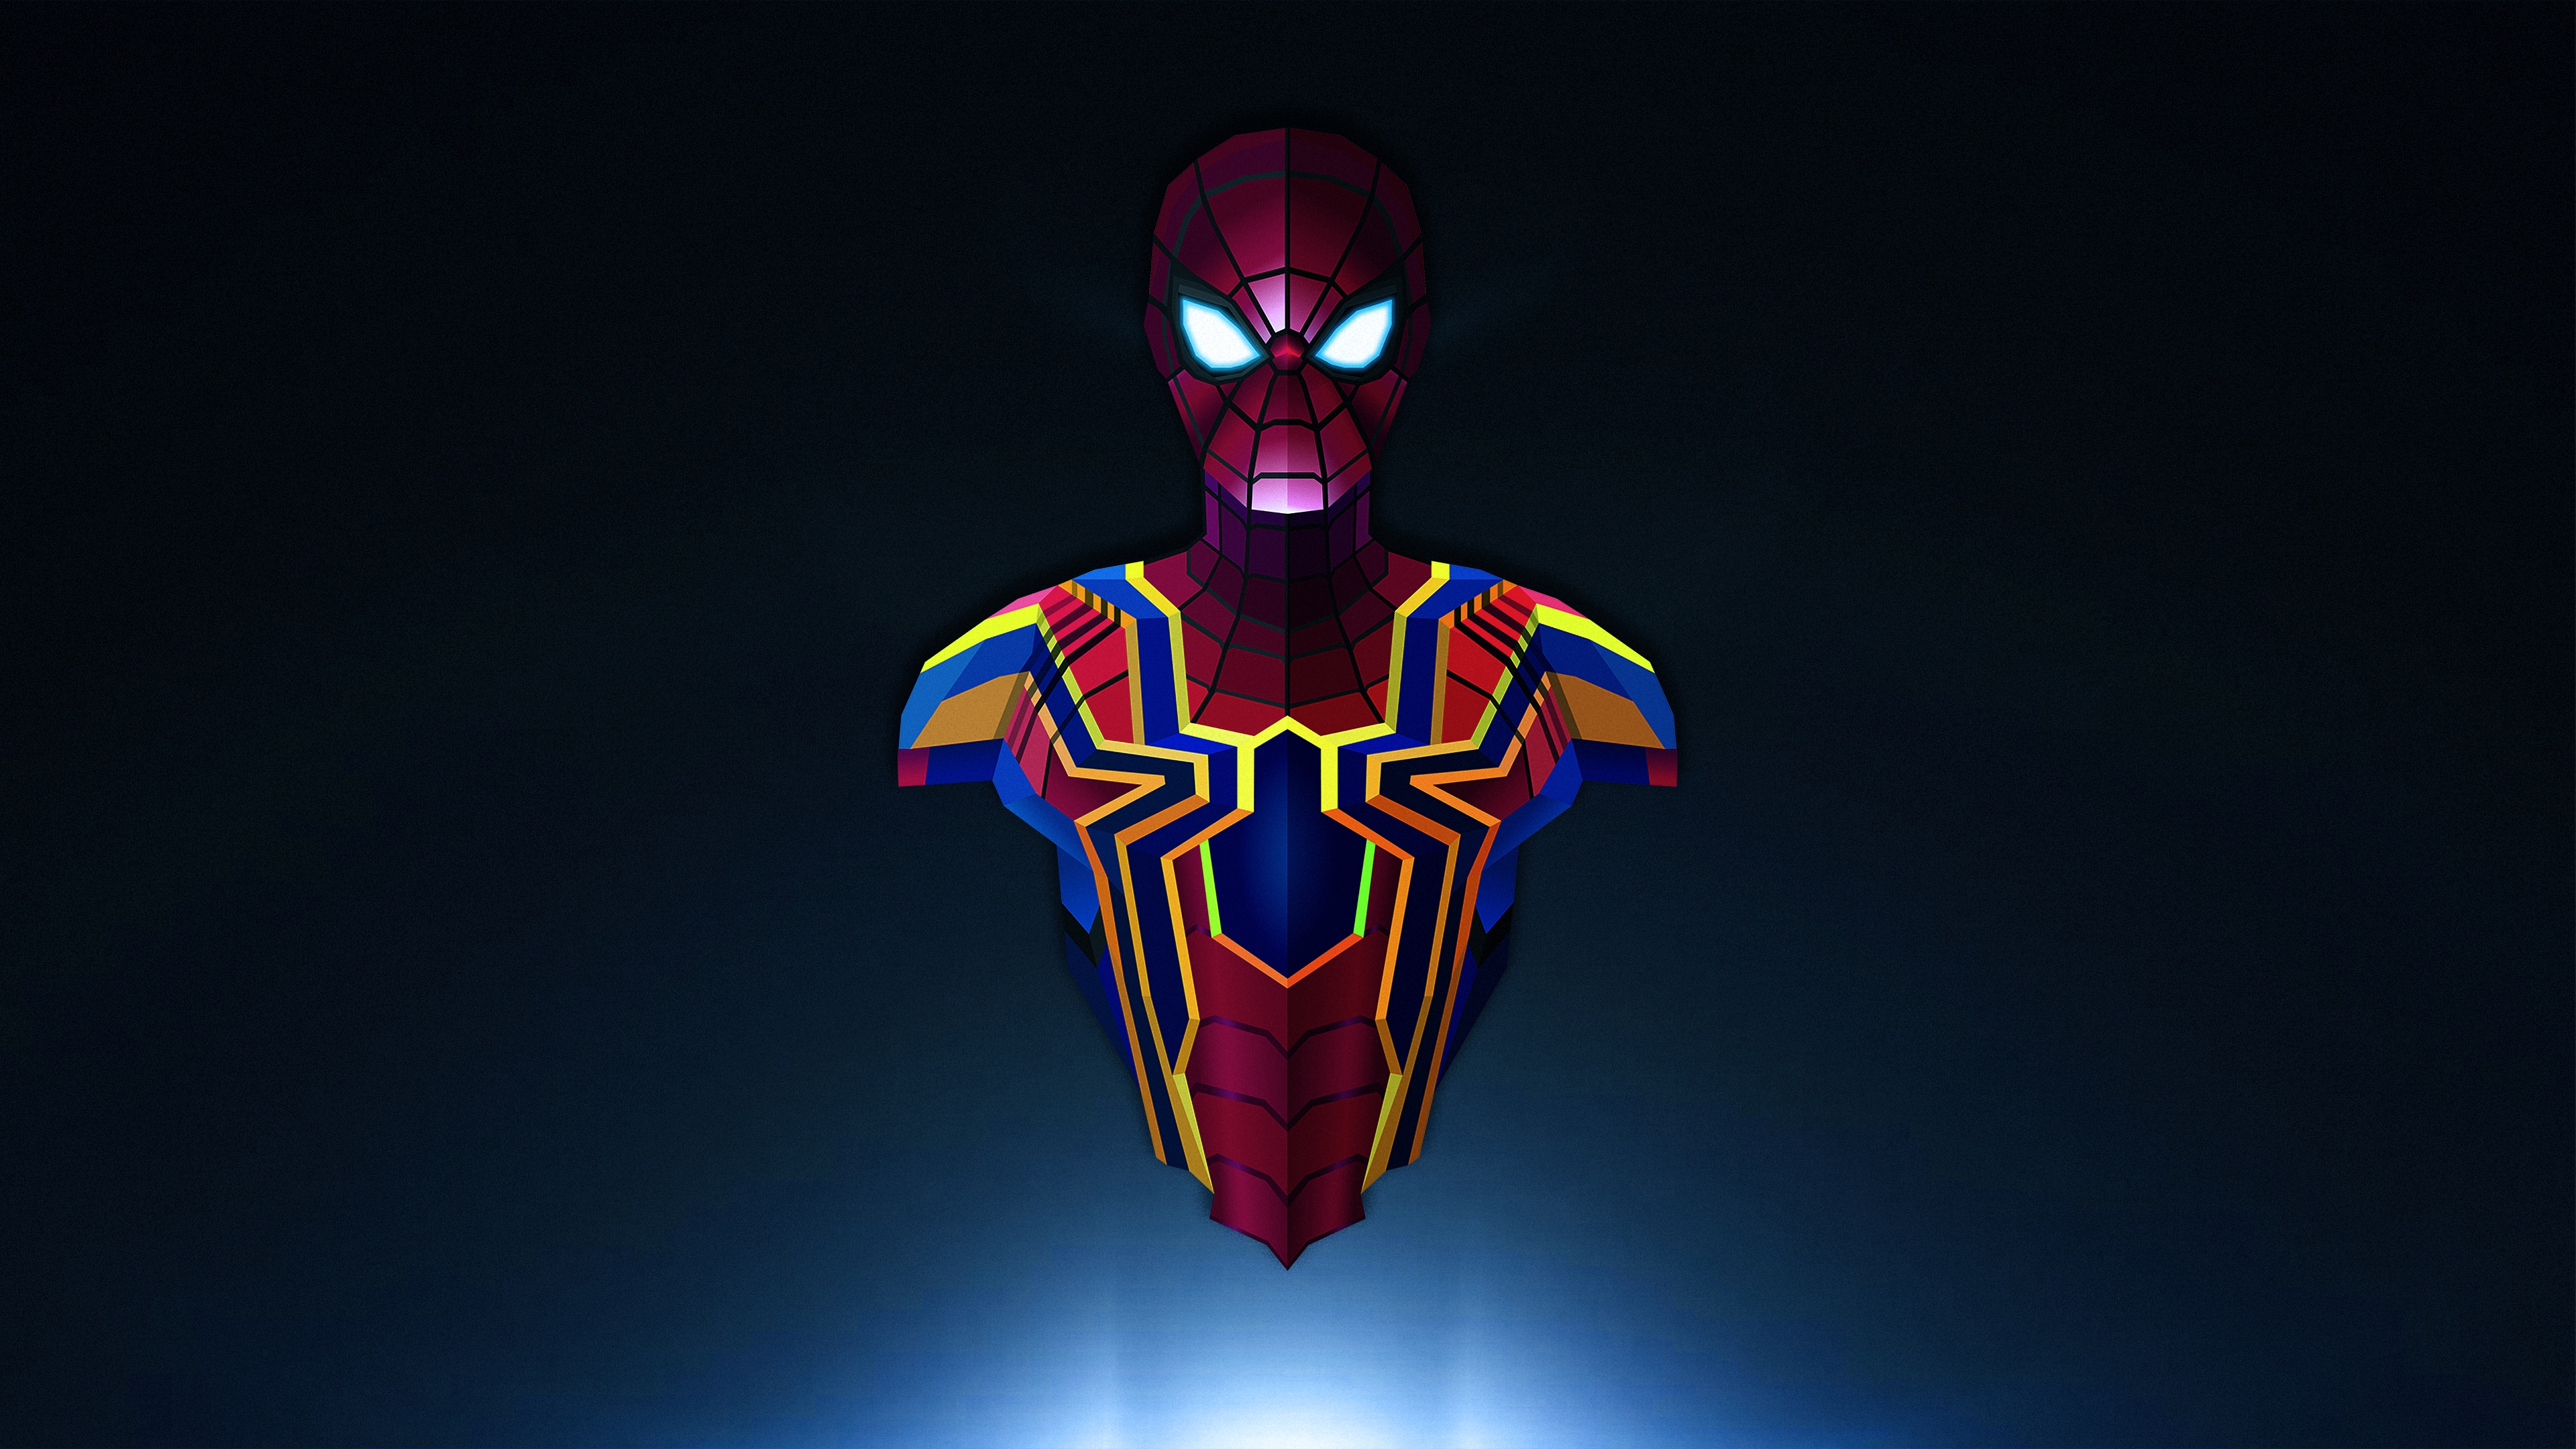 Iron-Spider Avengers Infinity War Wallpapers